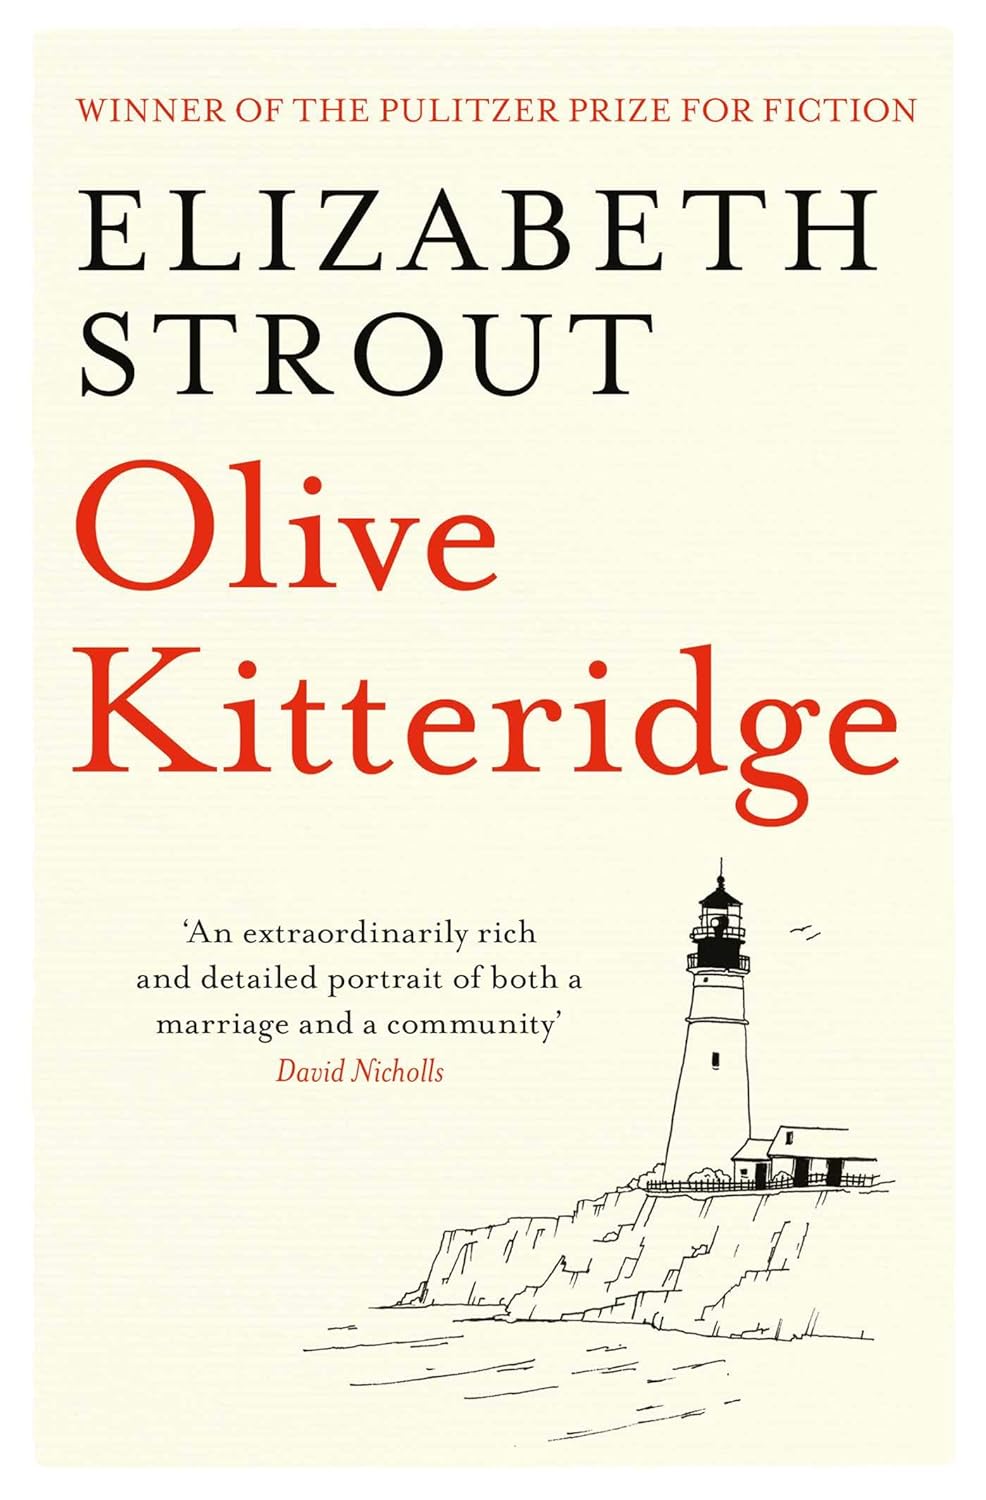 [EPUB] Olive Kitteridge #1 Olive Kitteridge by Elizabeth Strout